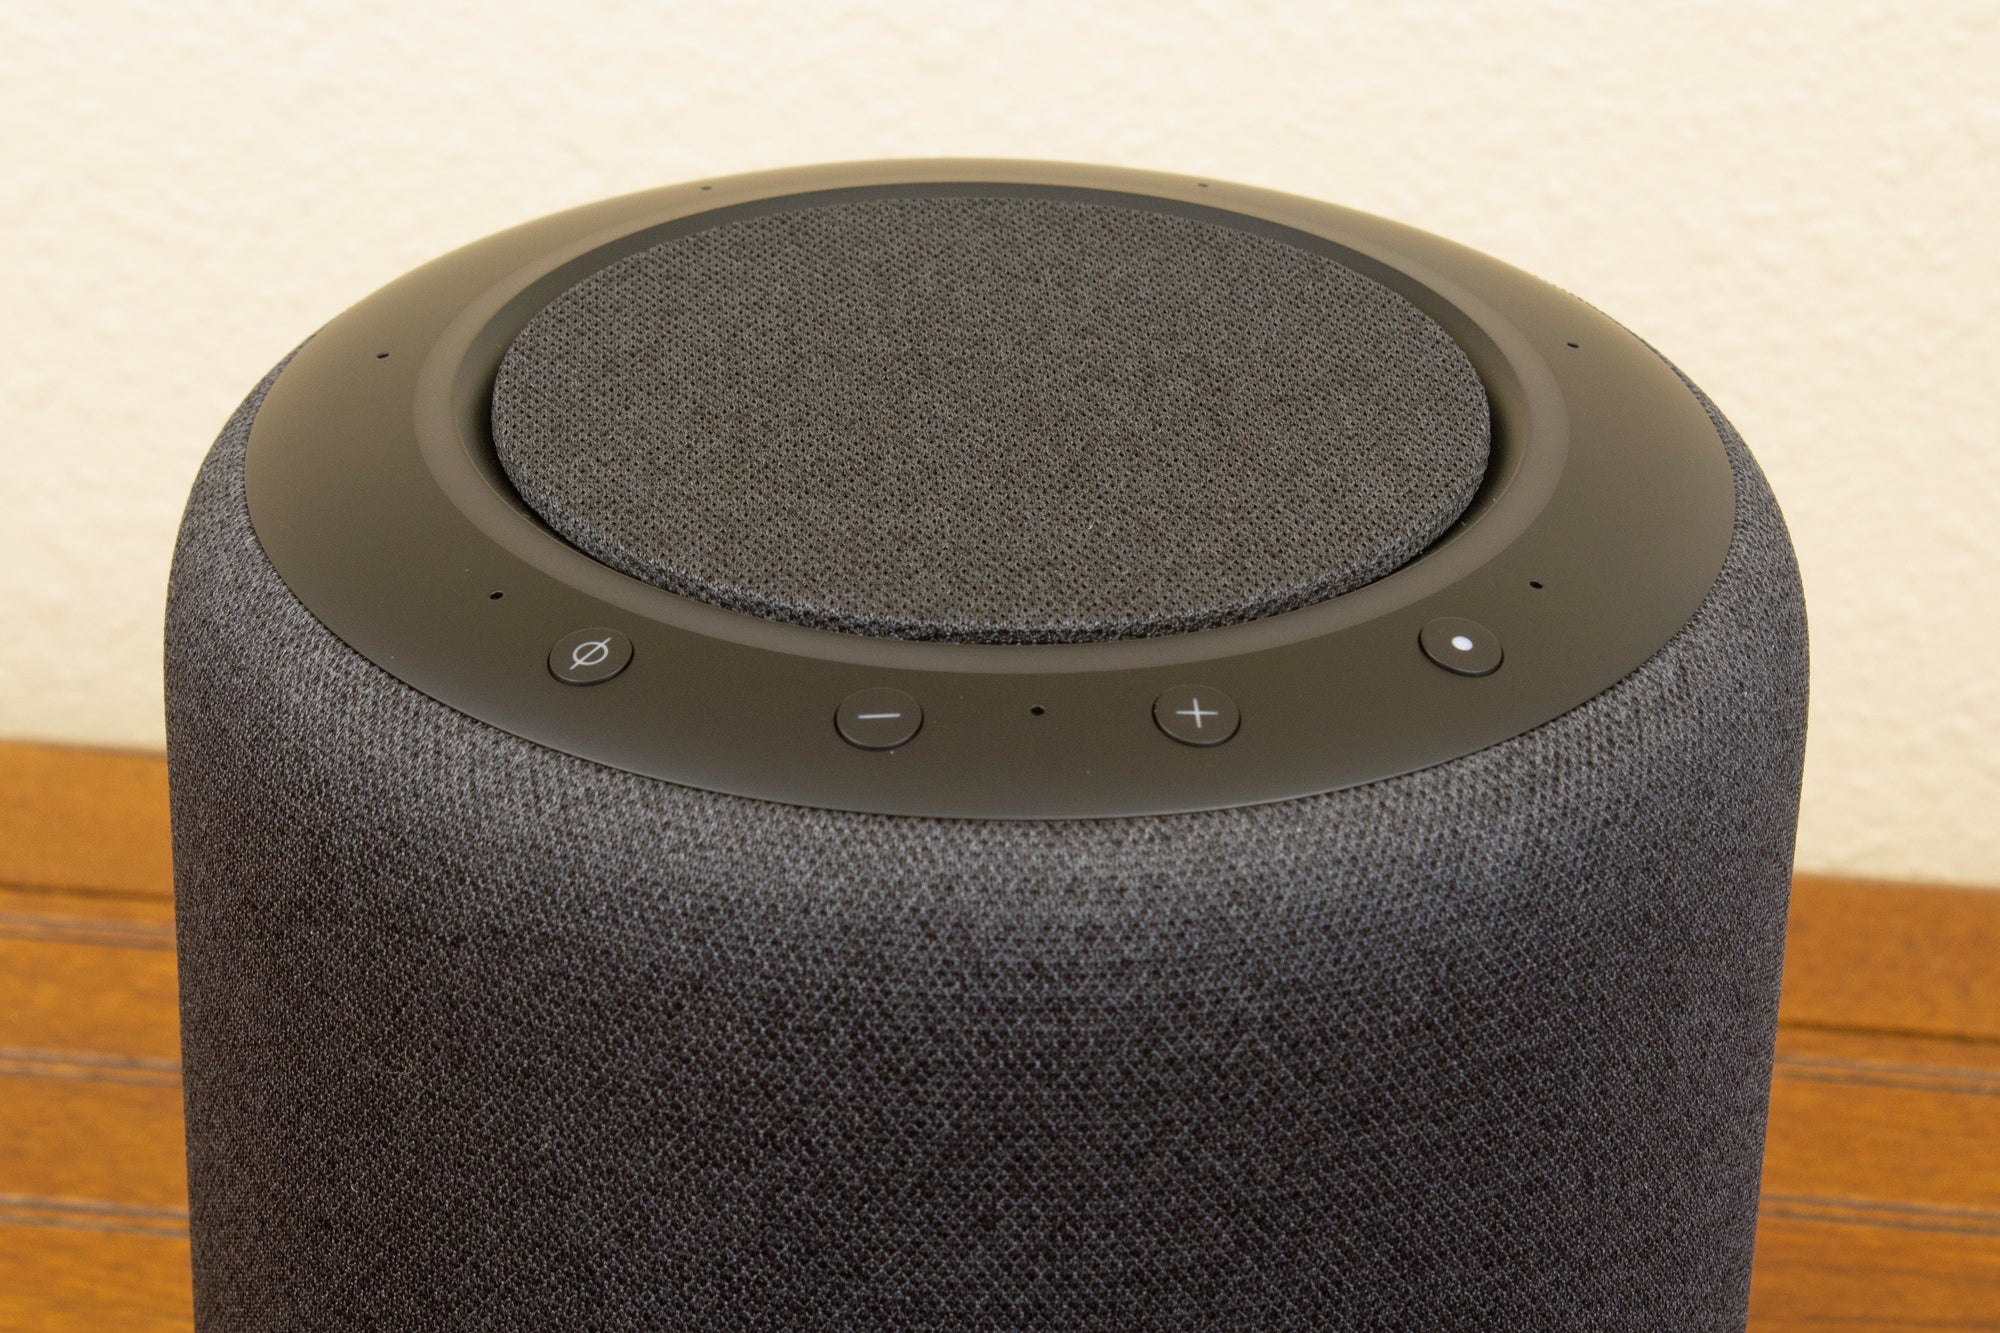 Amazon Echo Studio review: Not quite the best smart speaker, but a